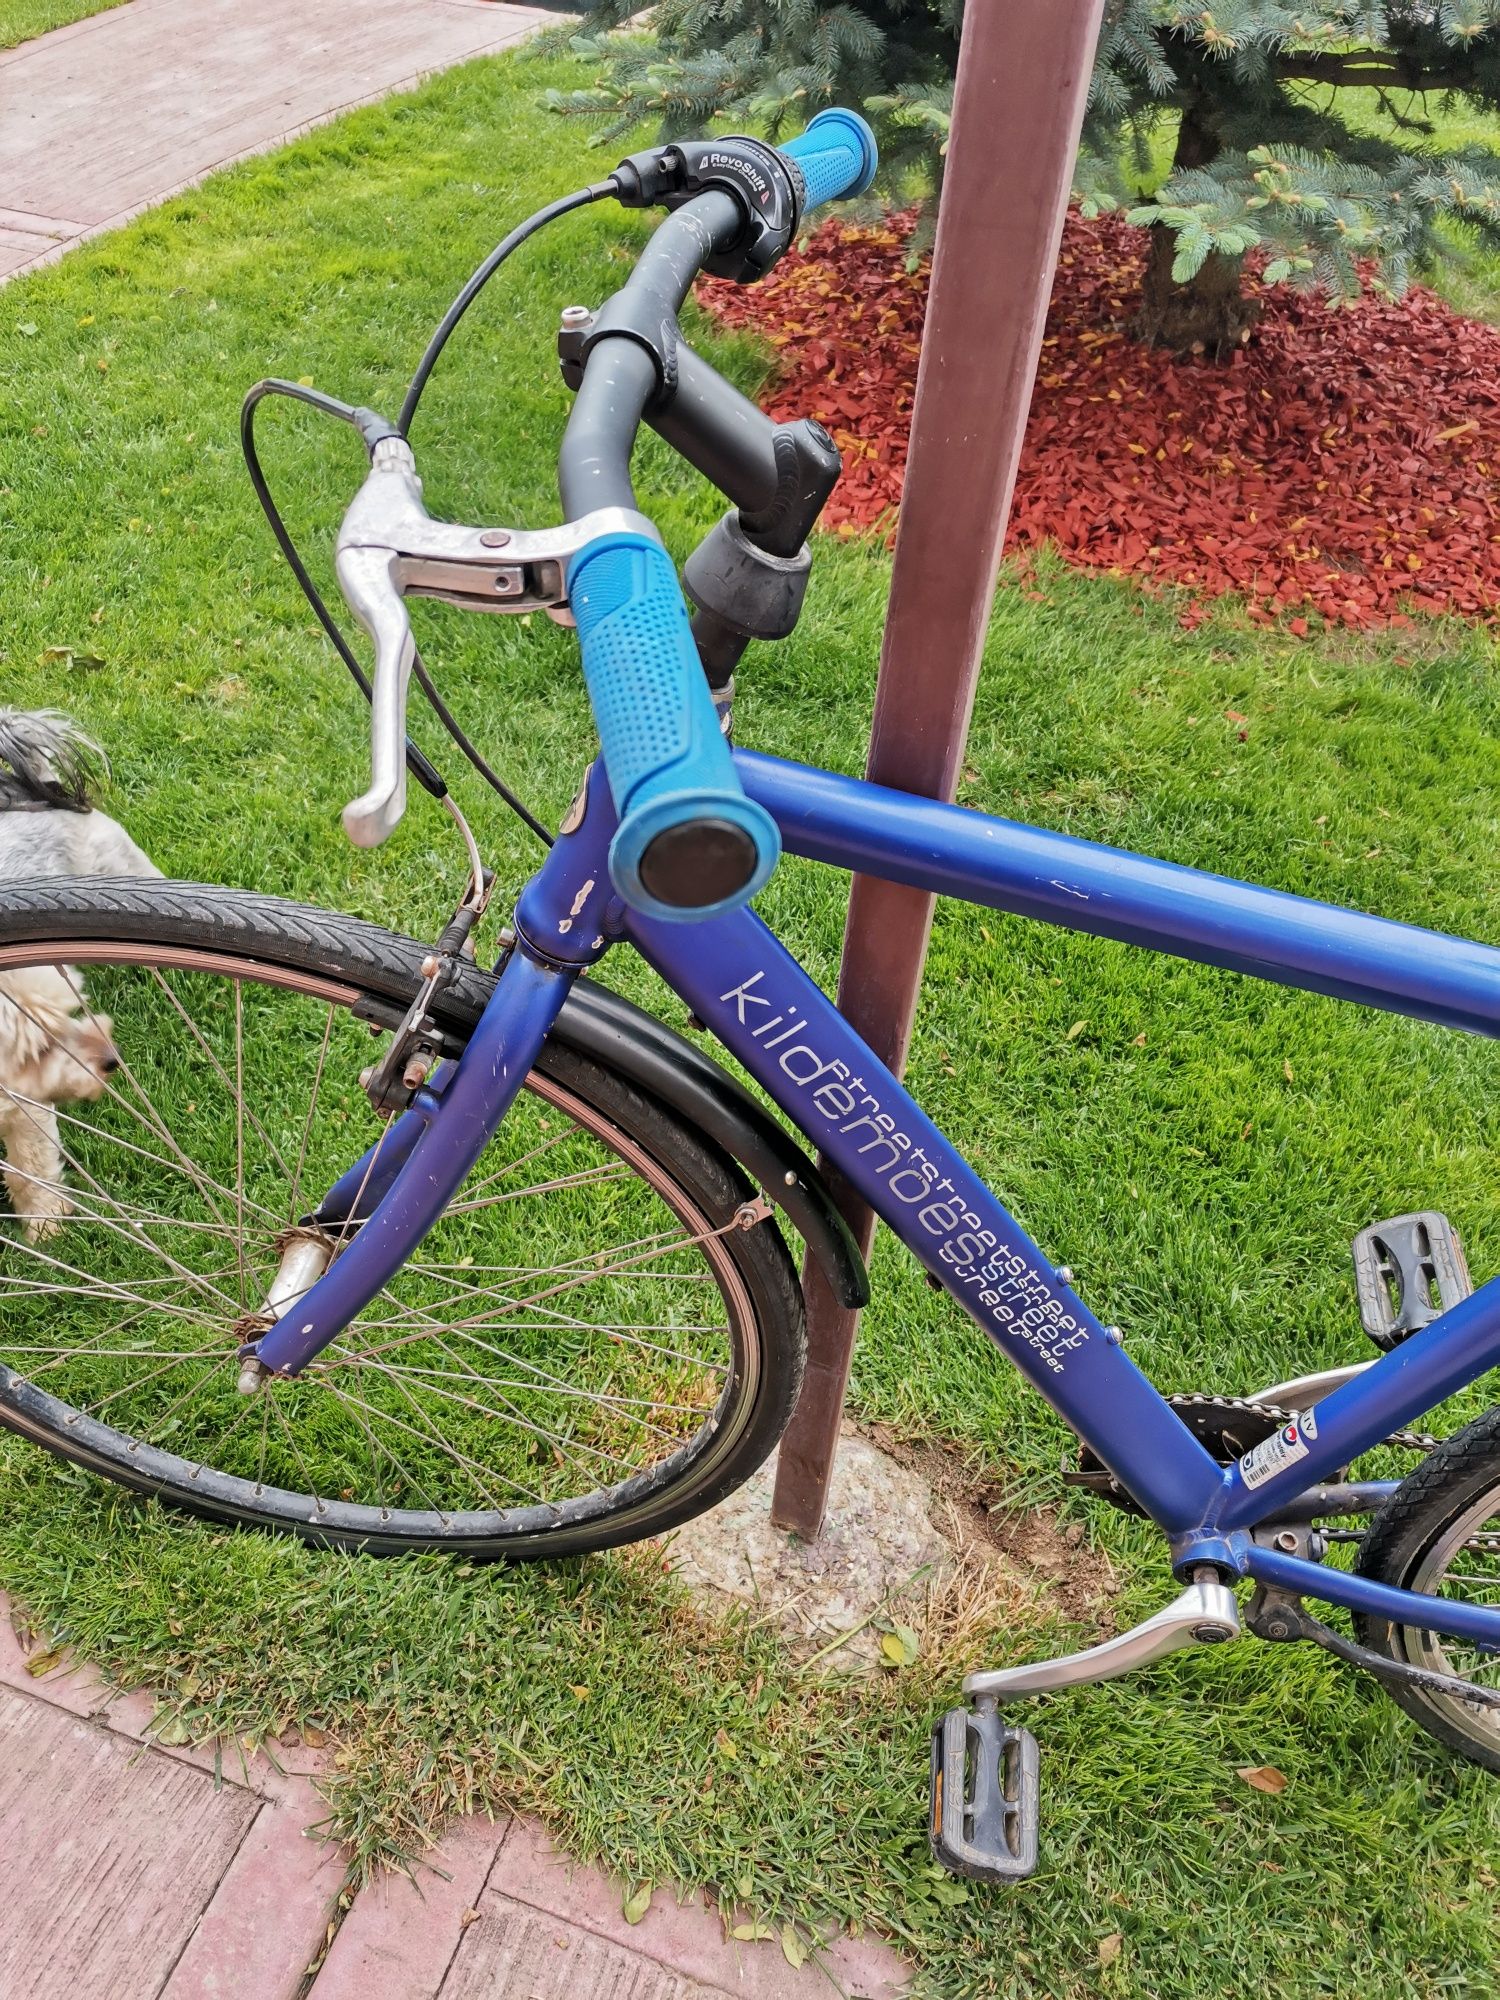 Bicicleta aluminiu kildemoes